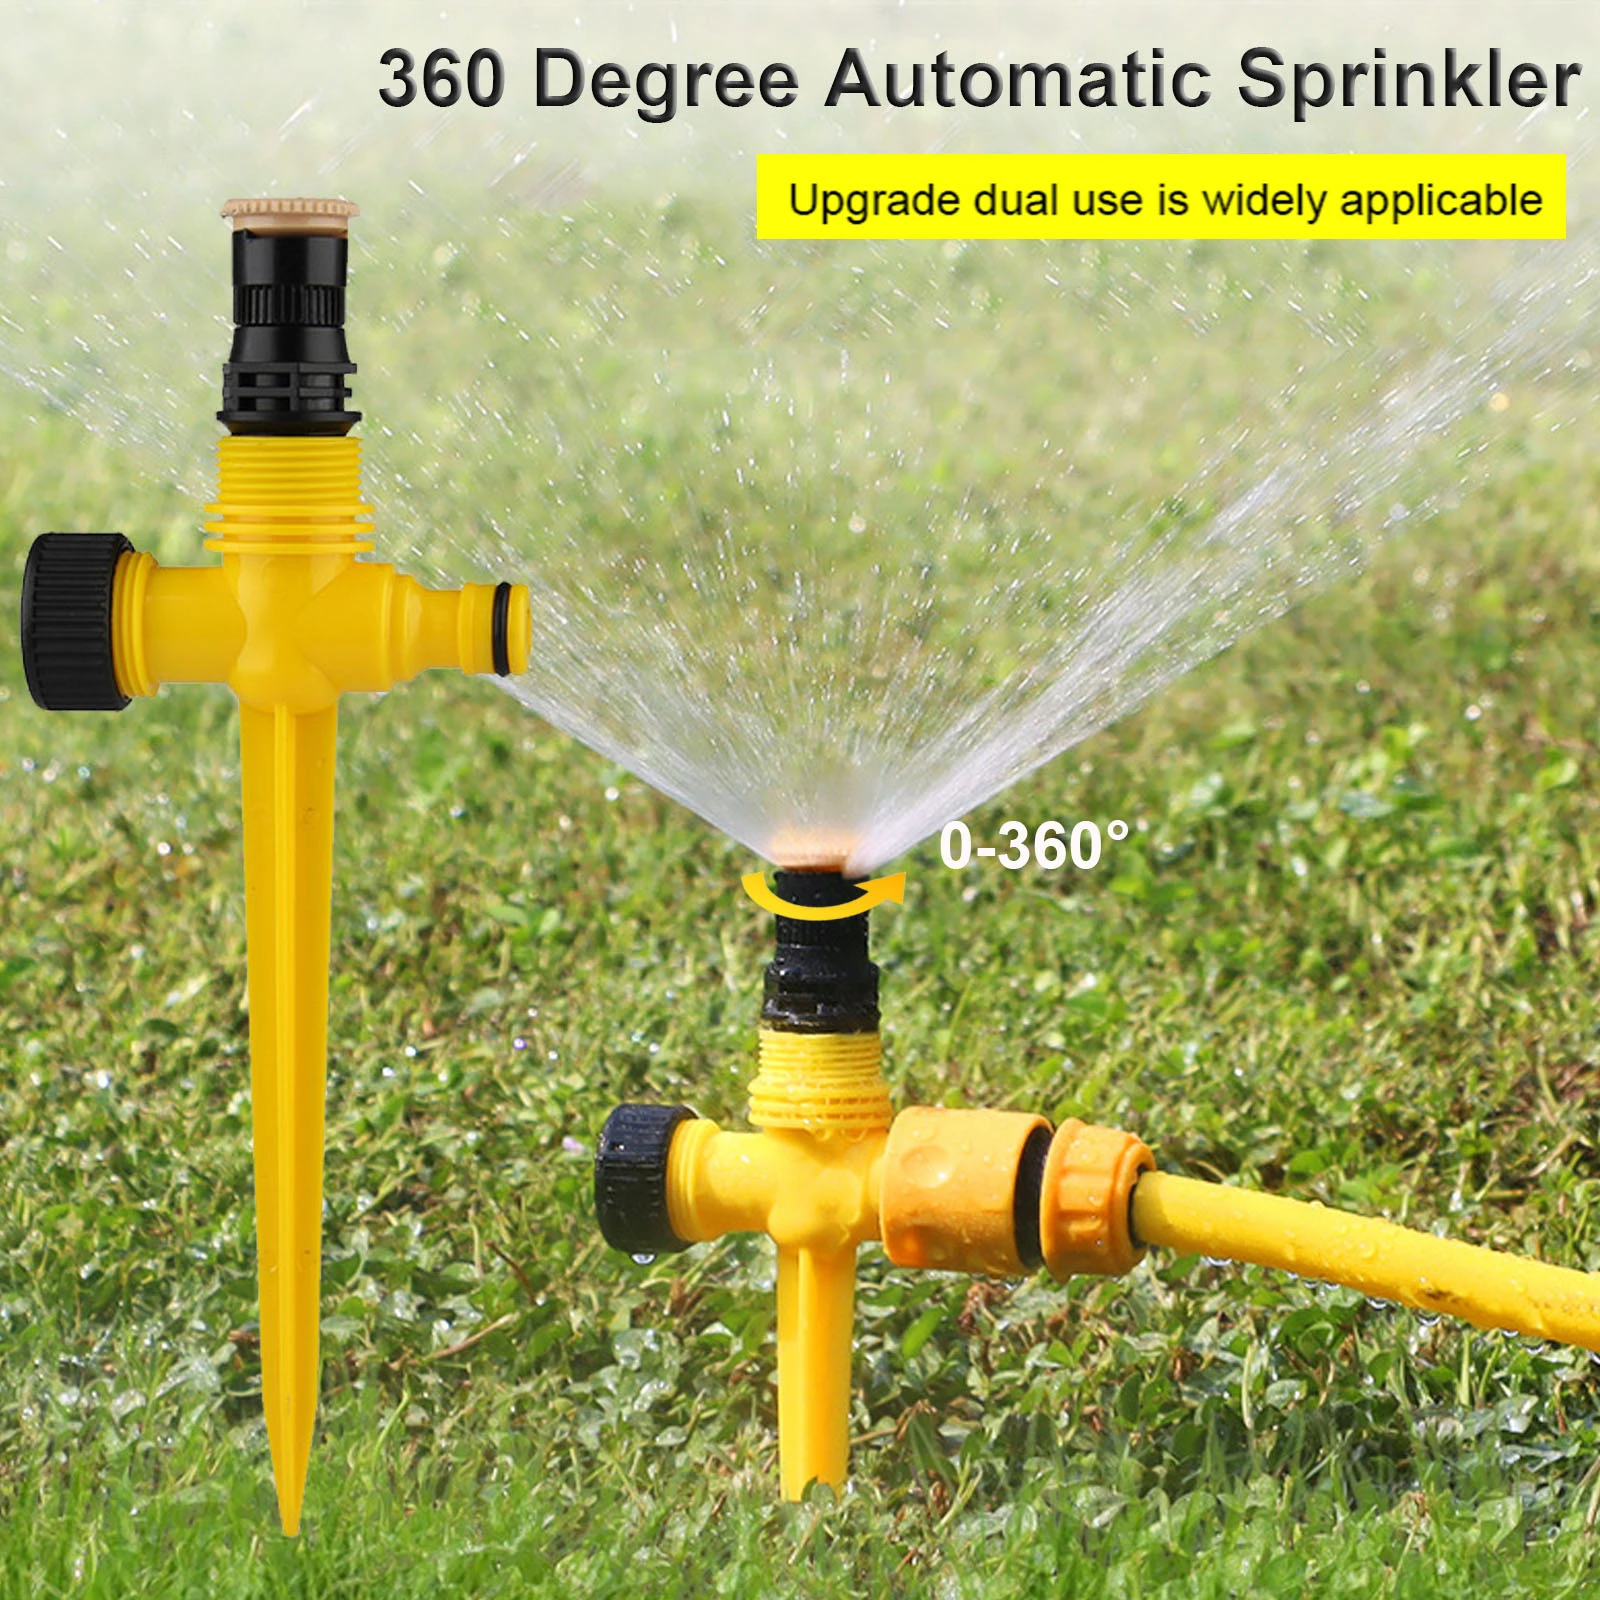 

360 Degree Automatic Sprinkler Lawn Irrigation Head Adjustable Spray Nozzles Roof Cooling Sprinkler Industry Garden Tool Instock